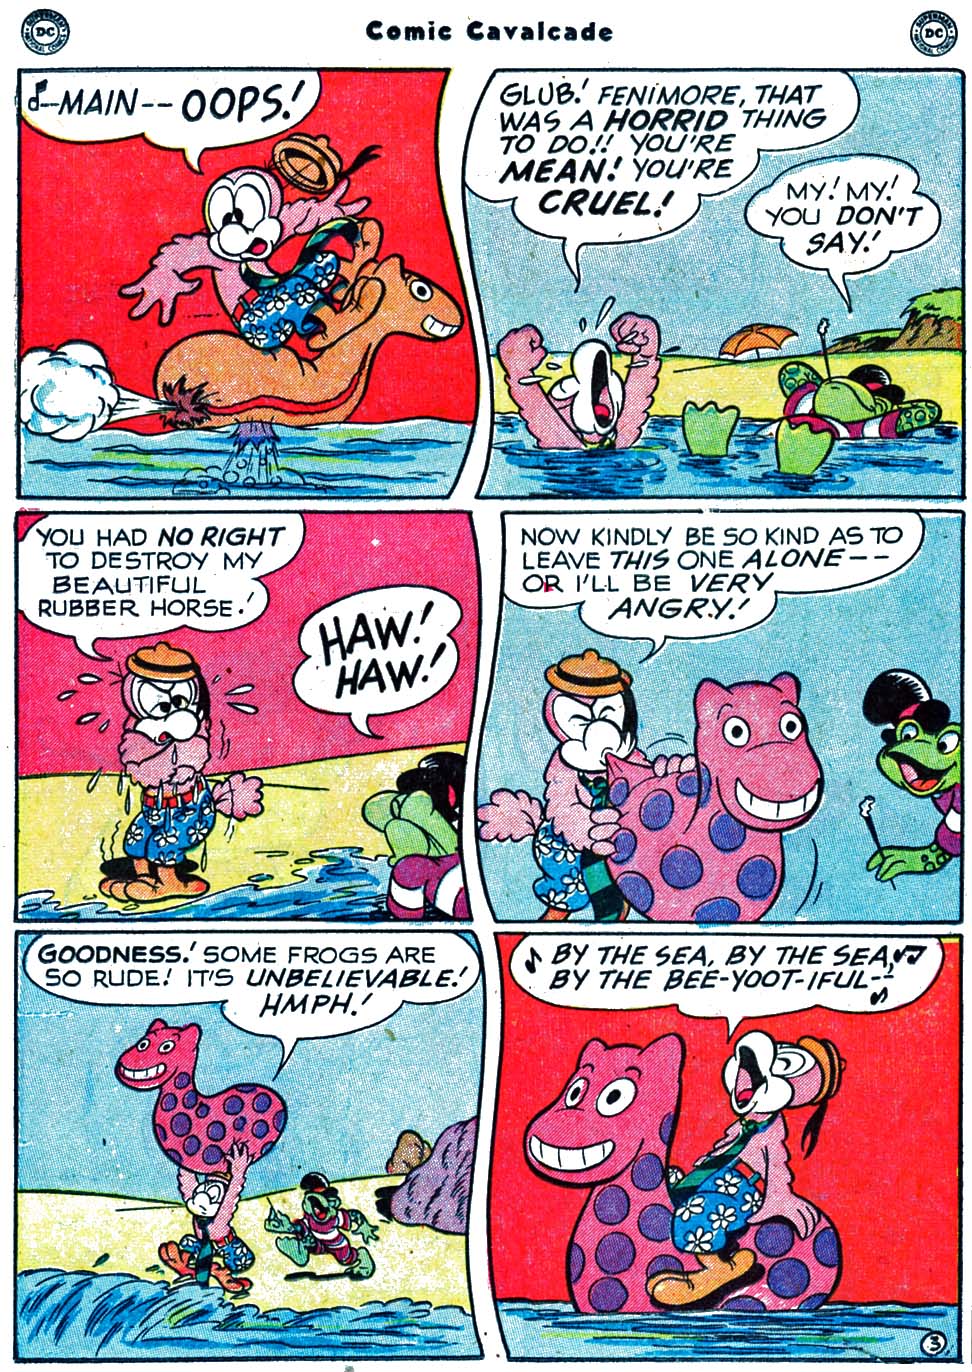 Comic Cavalcade issue 39 - Page 38